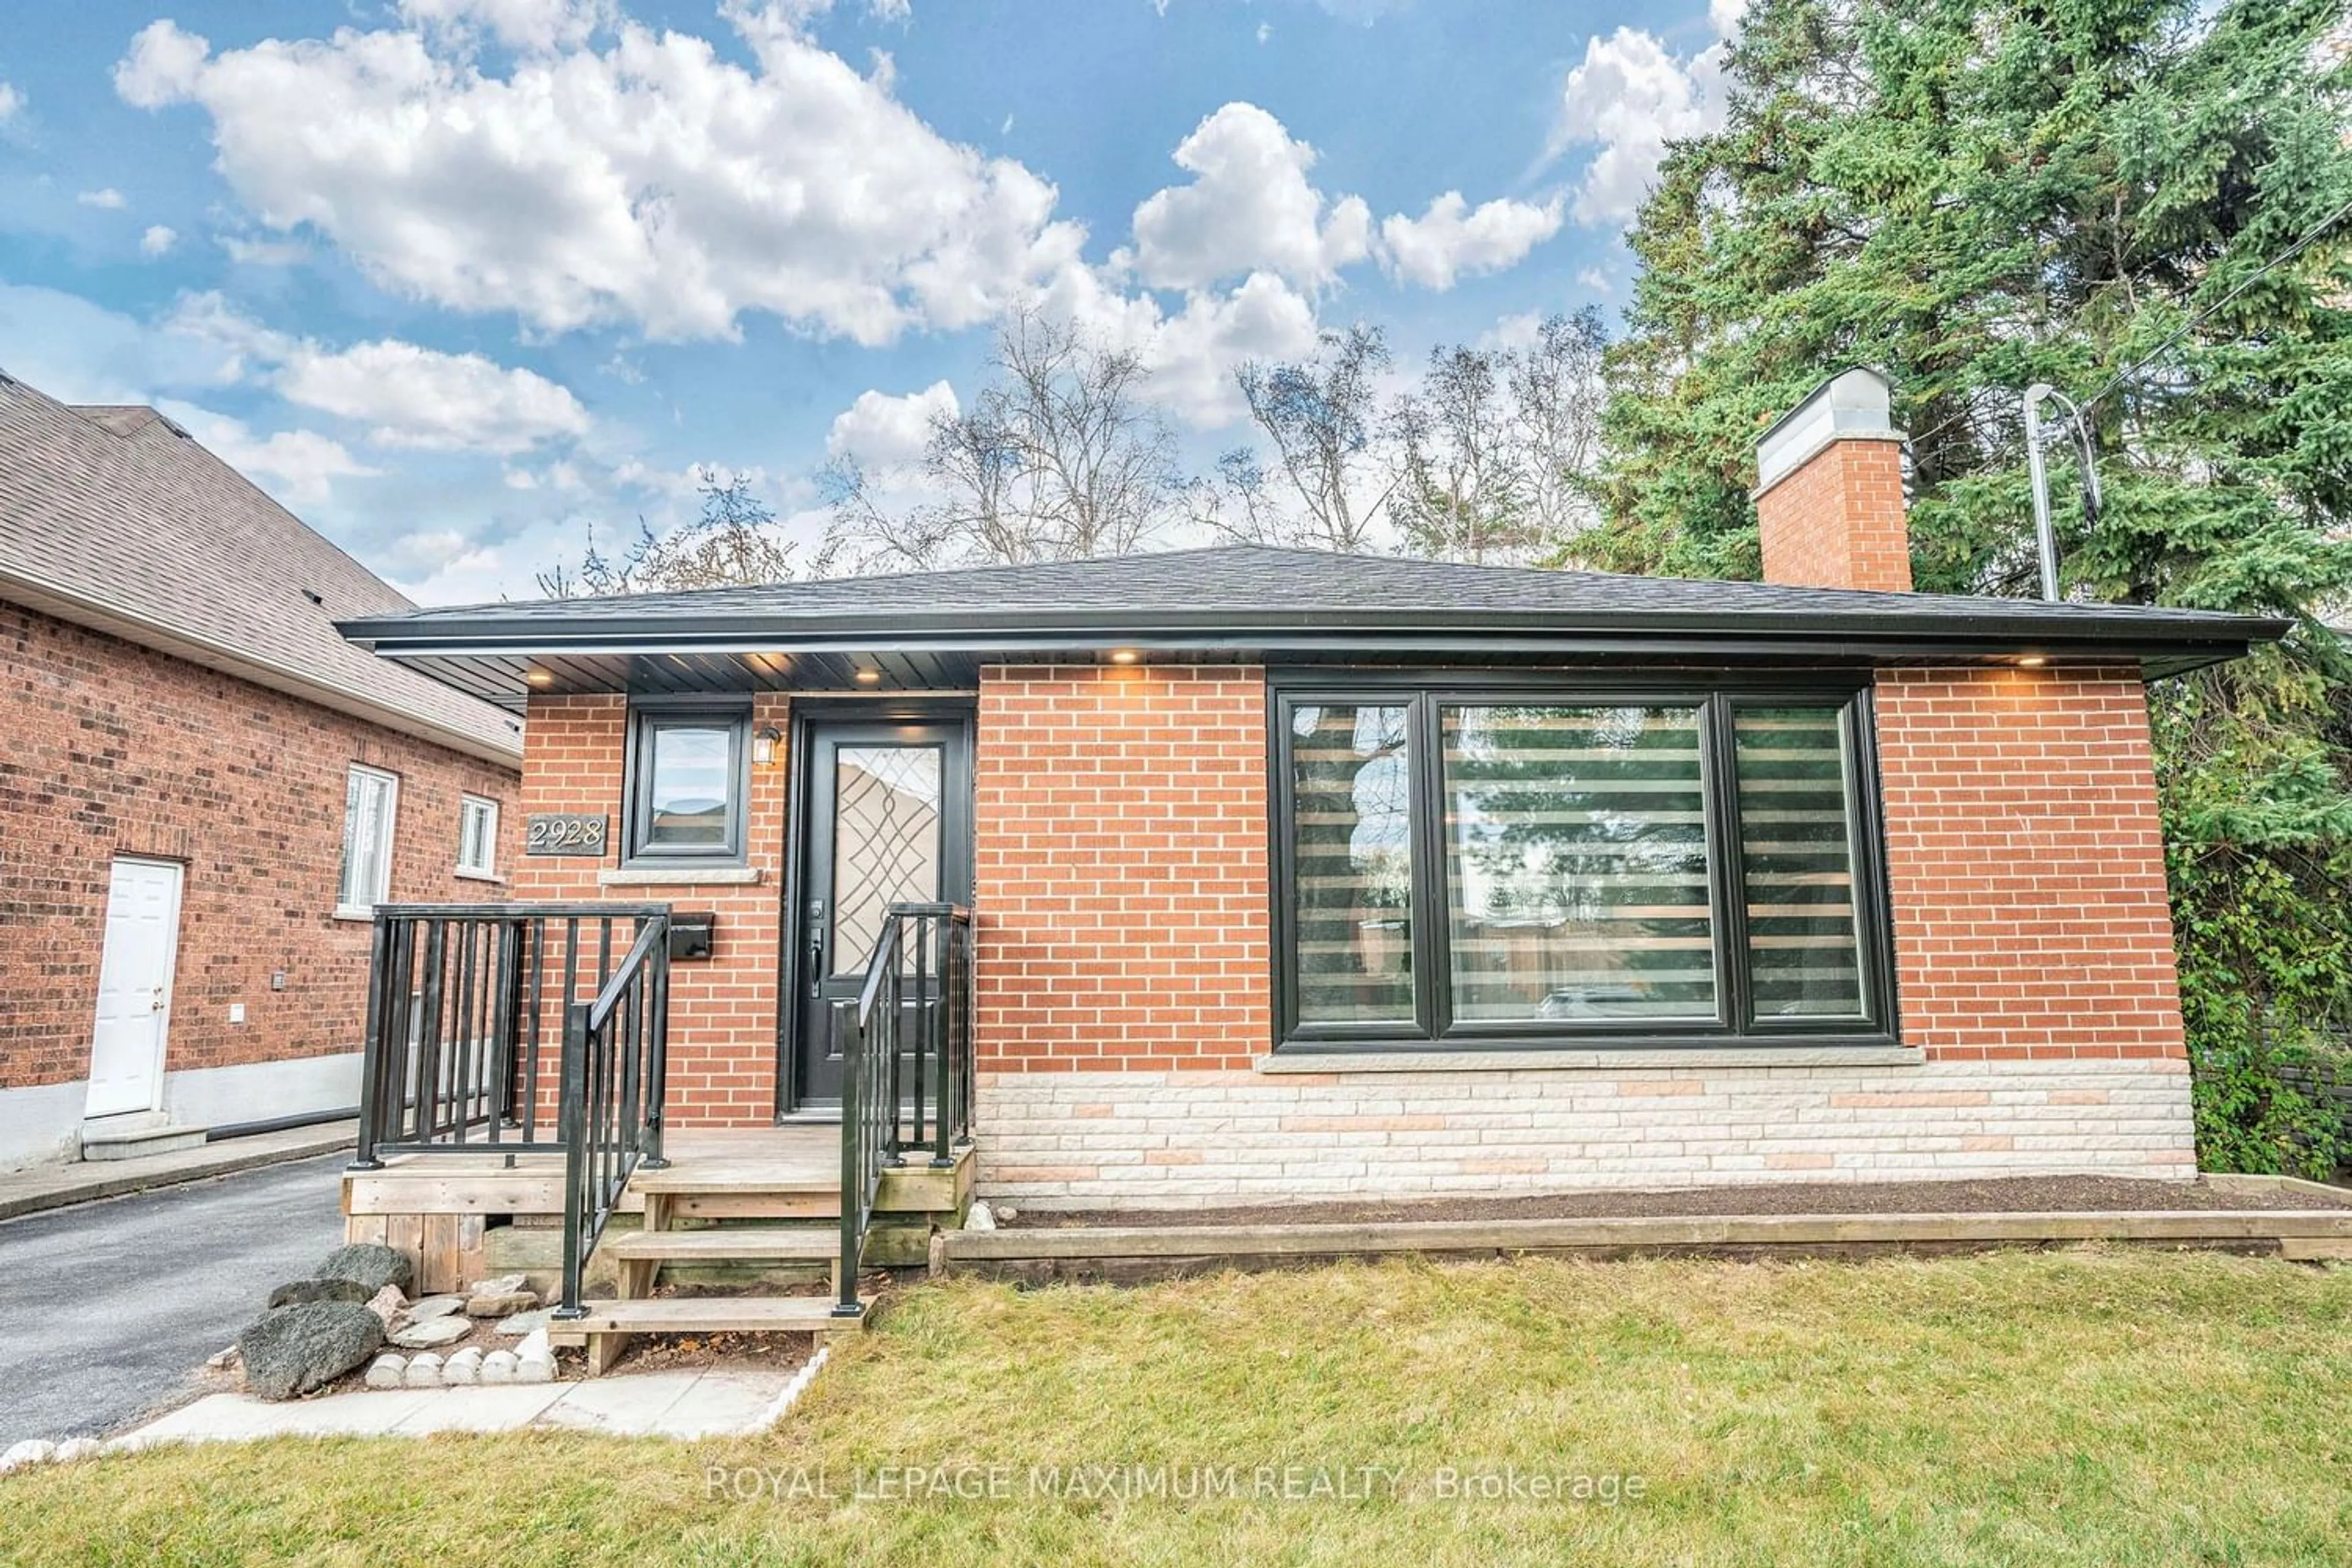 Home with brick exterior material for 2928 Beachview St, Ajax Ontario L1S 1C7